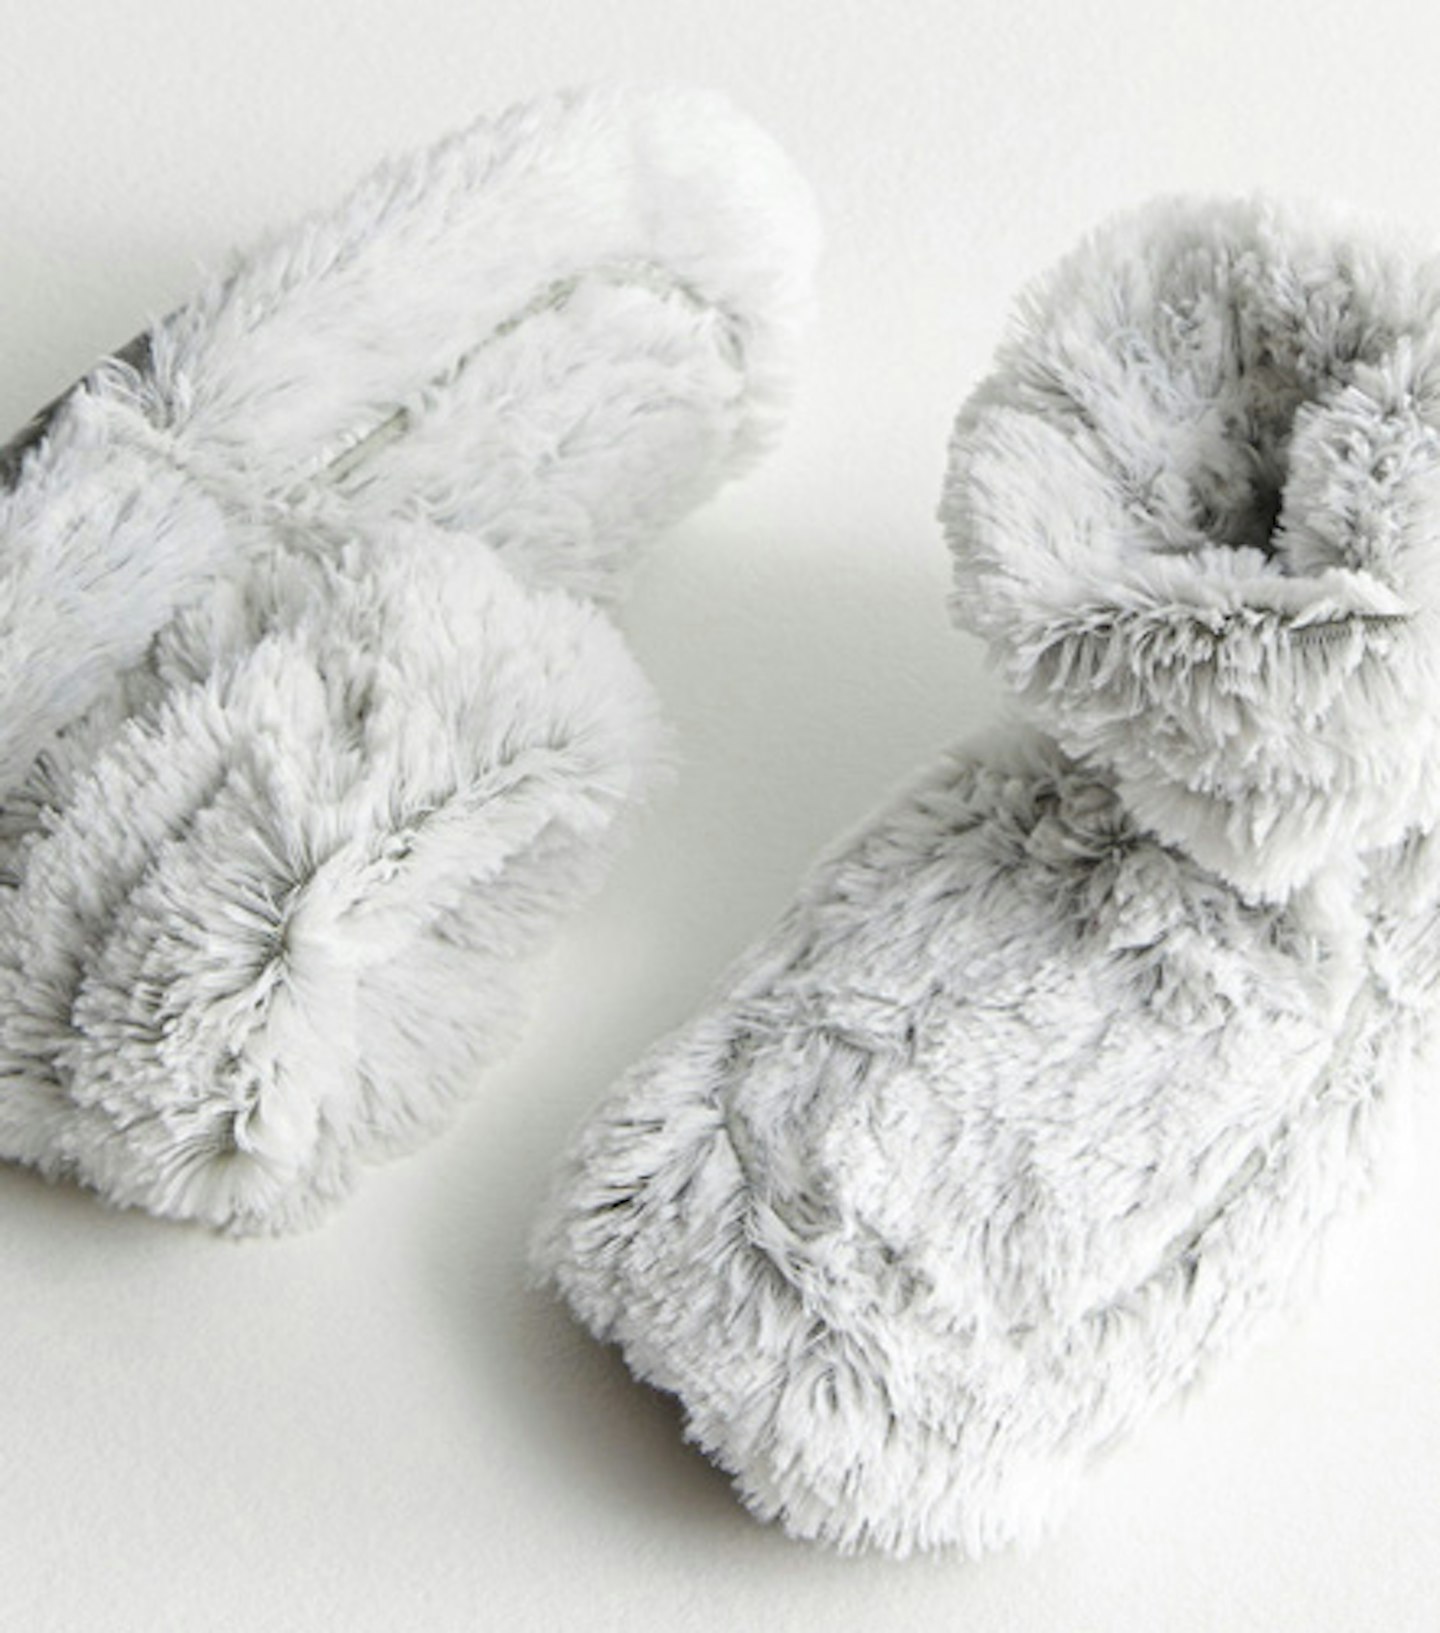 microwaveable slippers